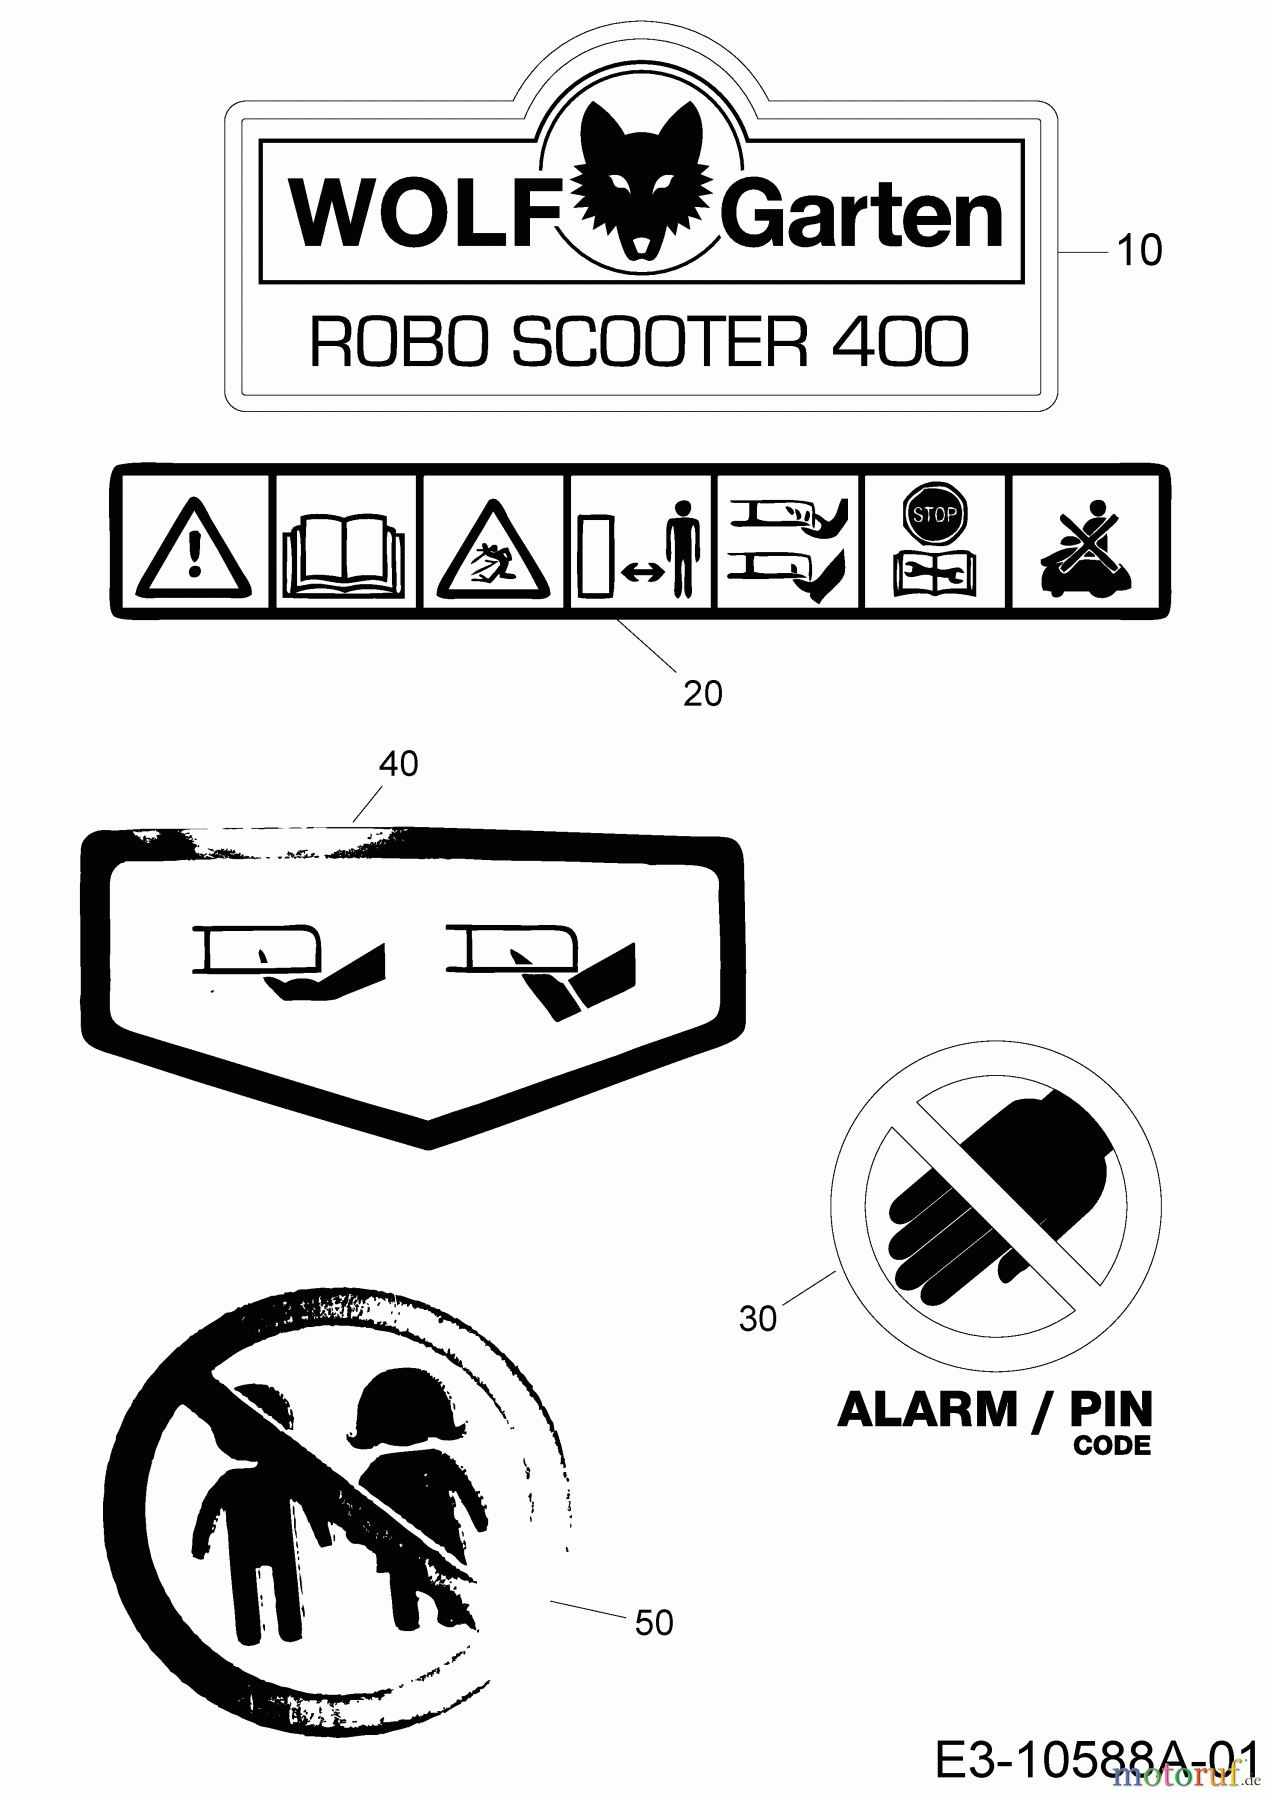  Wolf-Garten Robotic lawn mower Robo Scooter 600 18AO06LF650  (2015) Labels